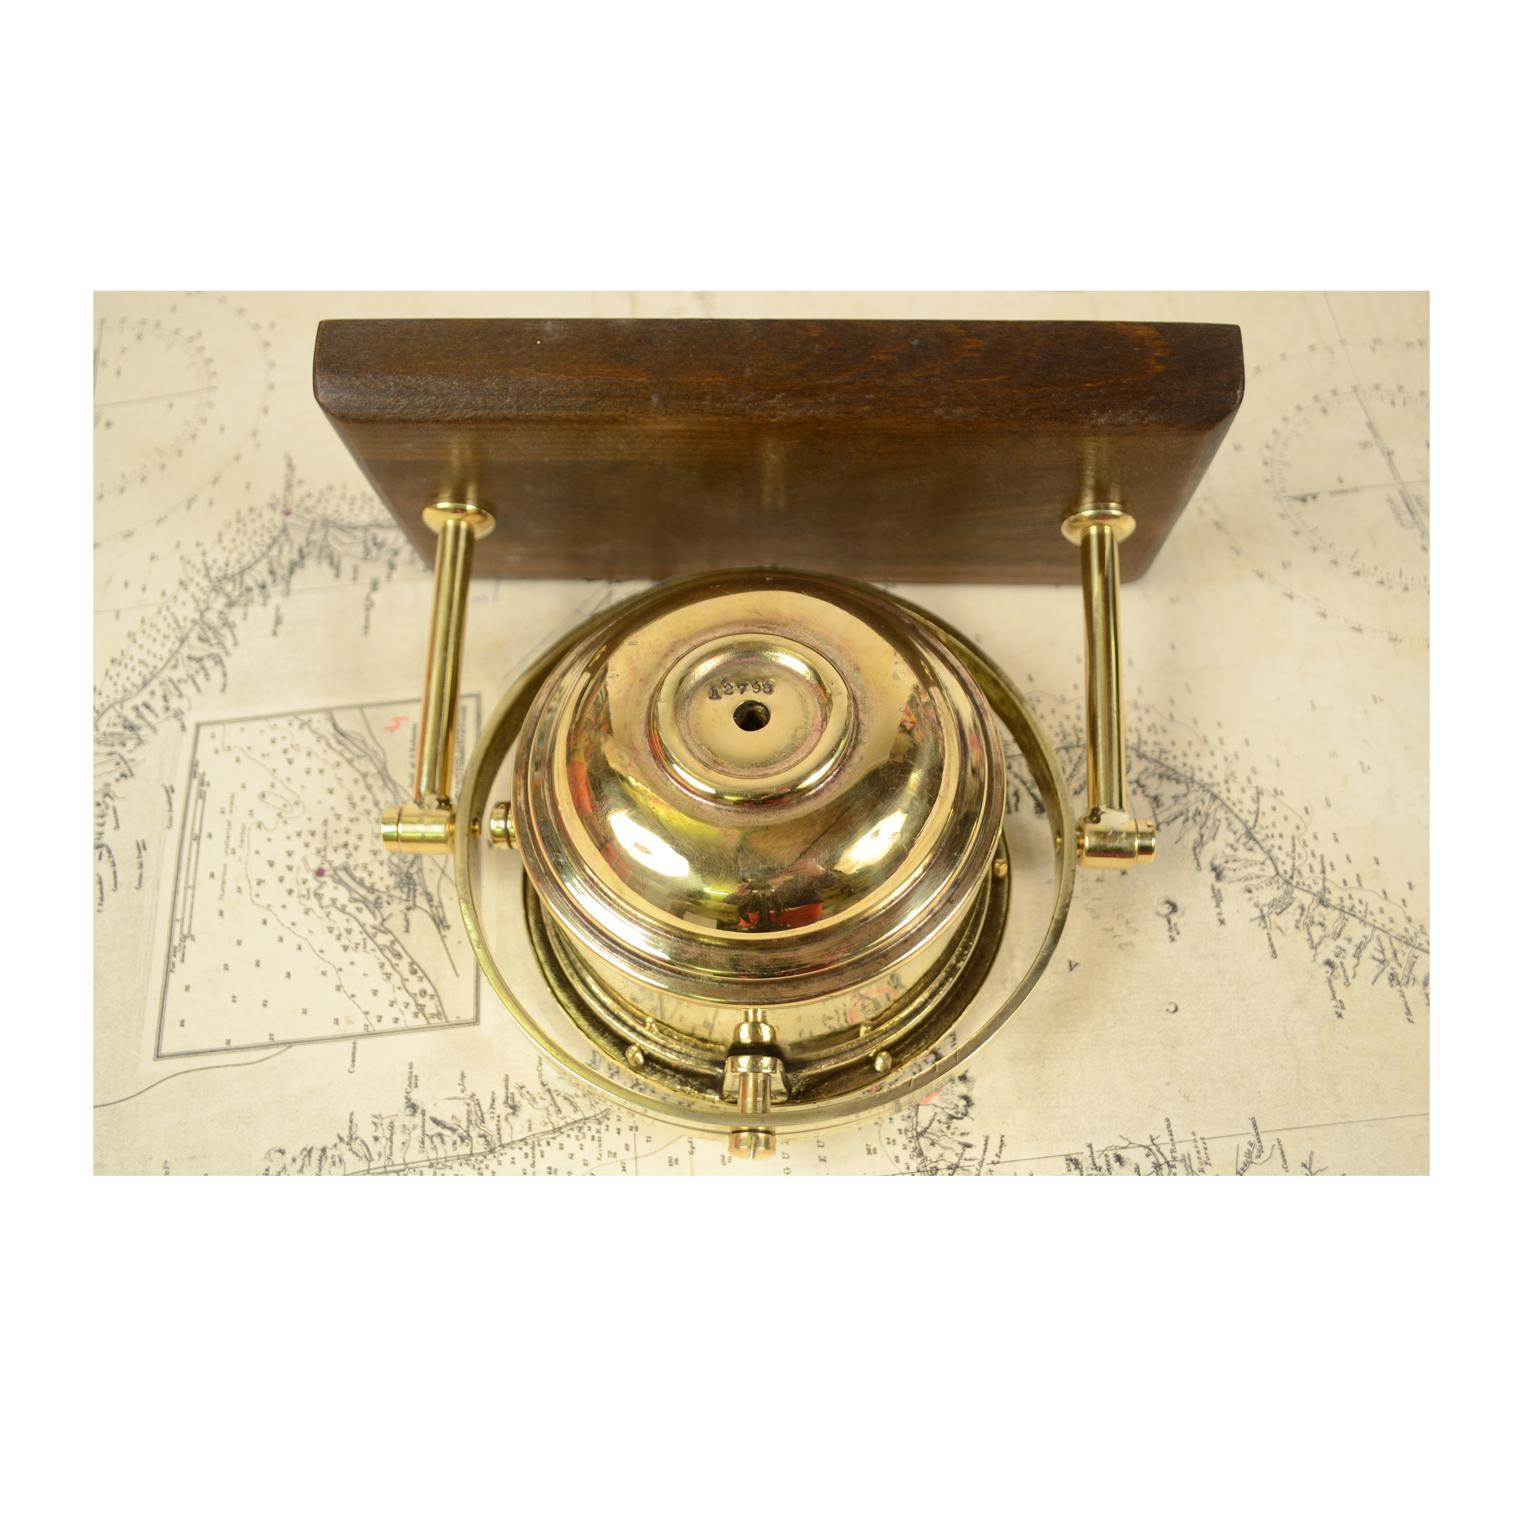 British Nautical Compass signed Sestrel, UK, 1876